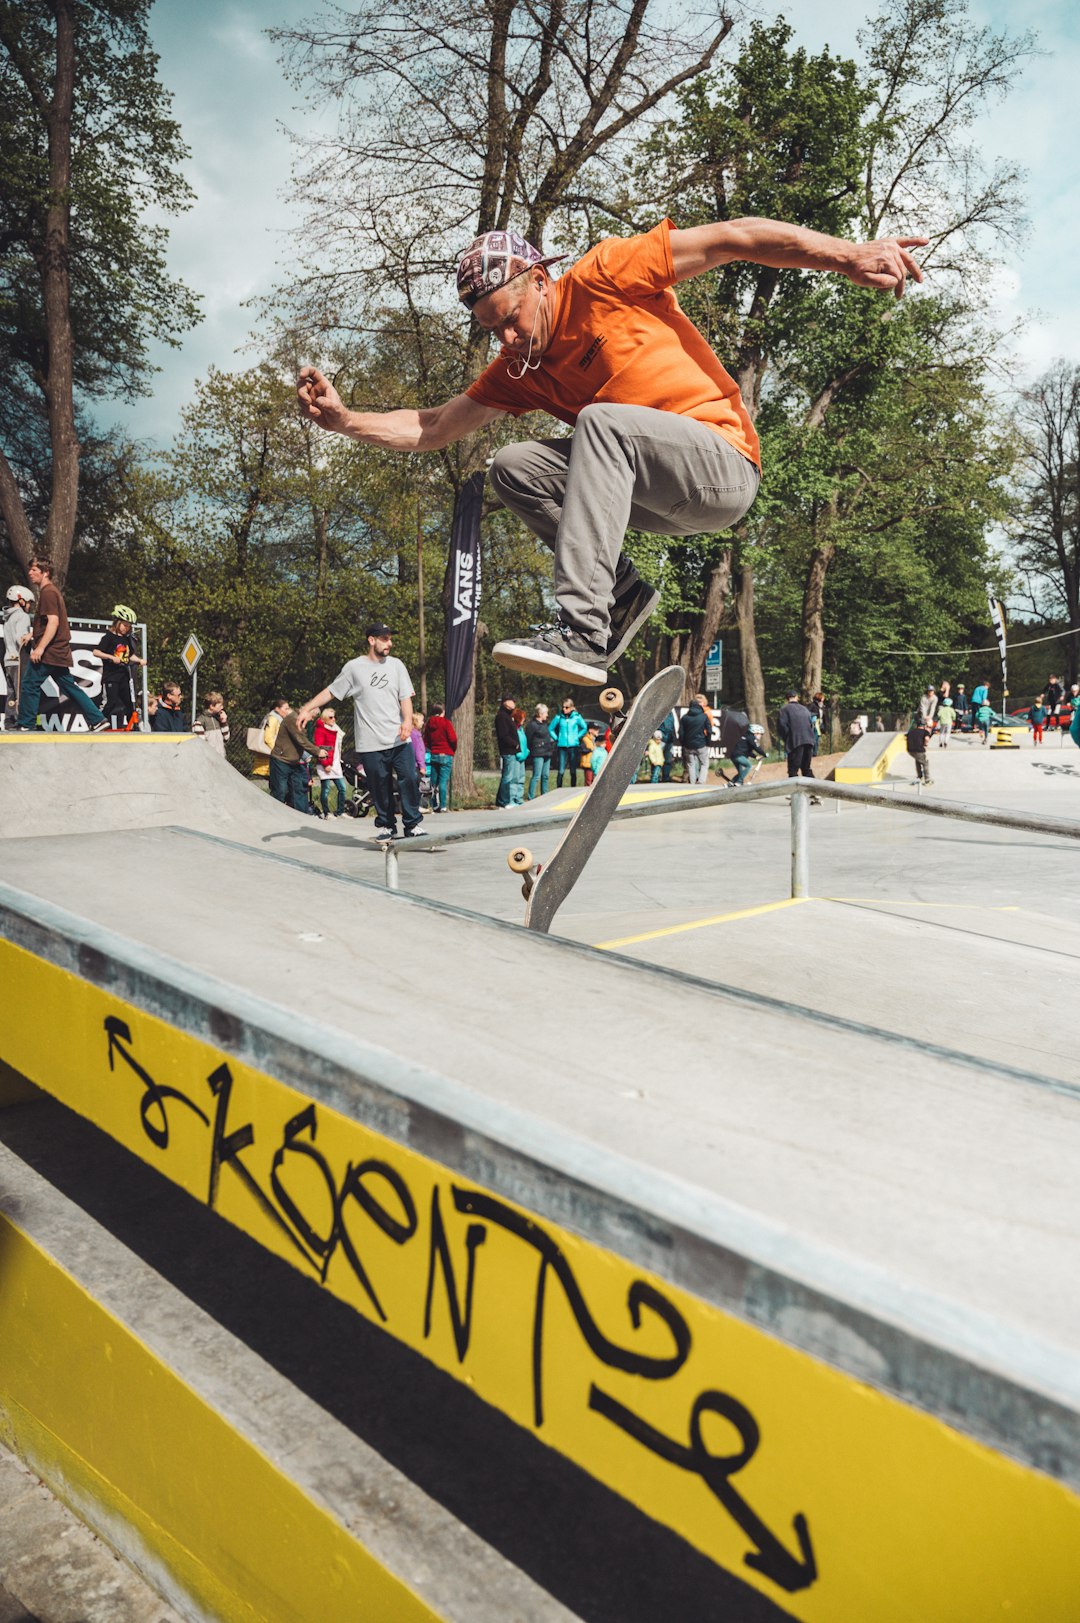 man doing skateboard tricks at the park